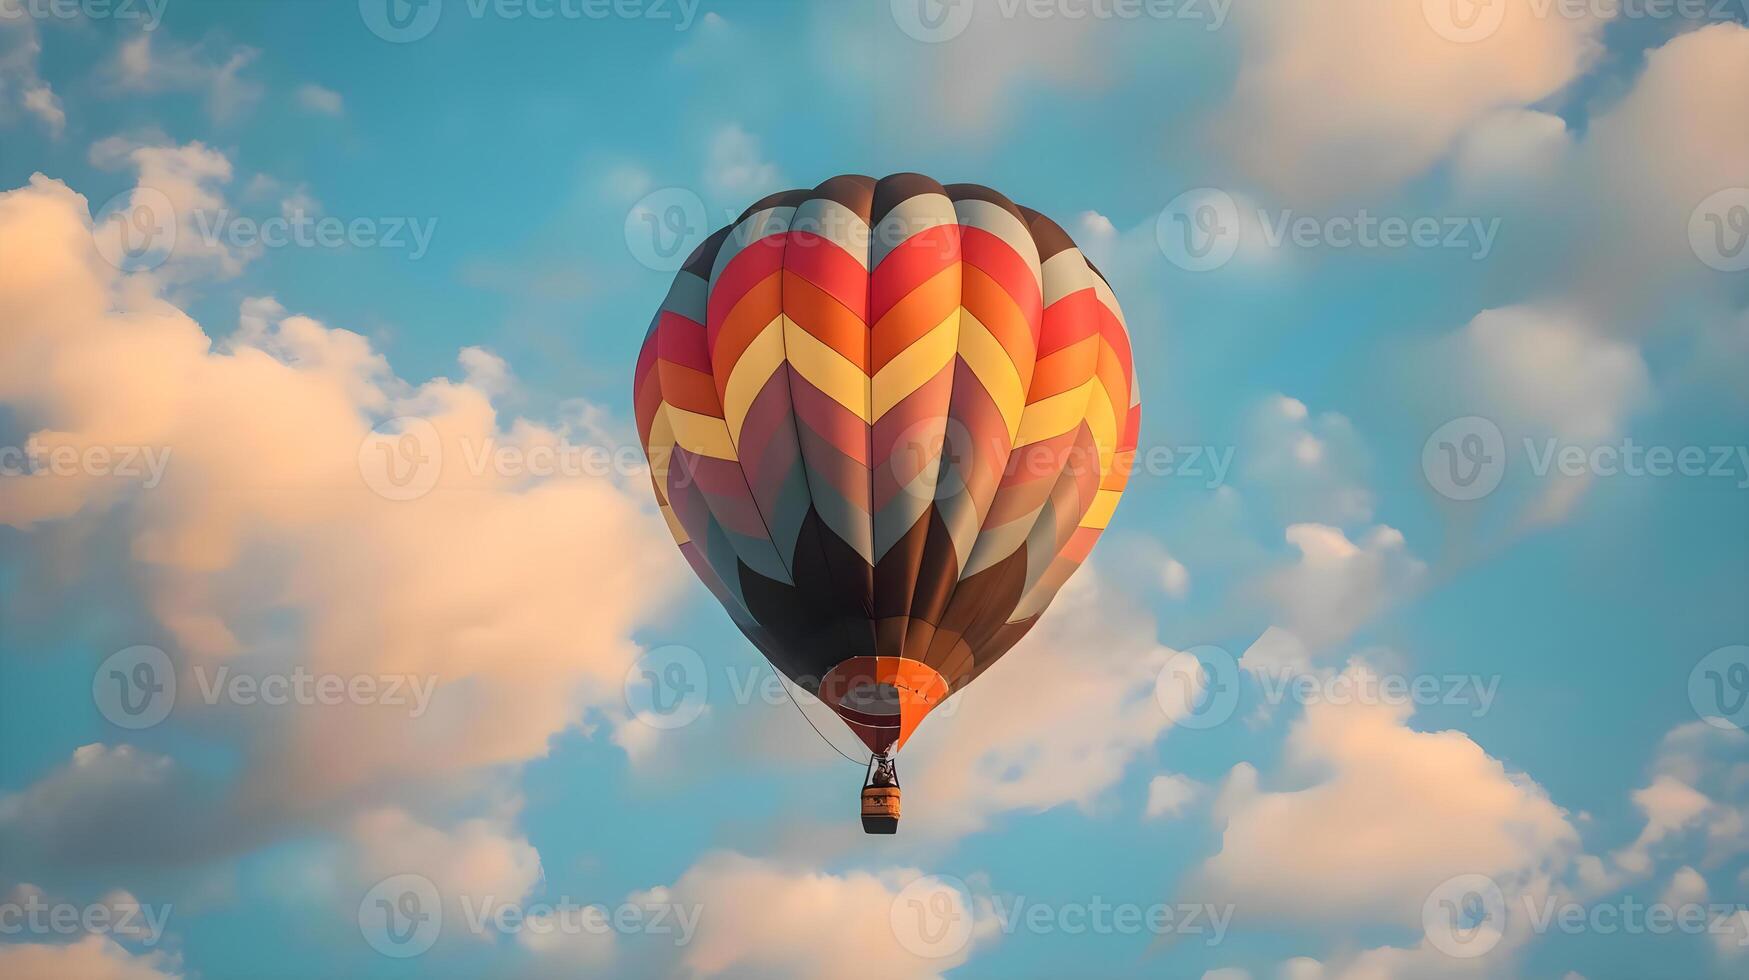 AI generated a hot air balloon flying through a cloudy blue sky photo